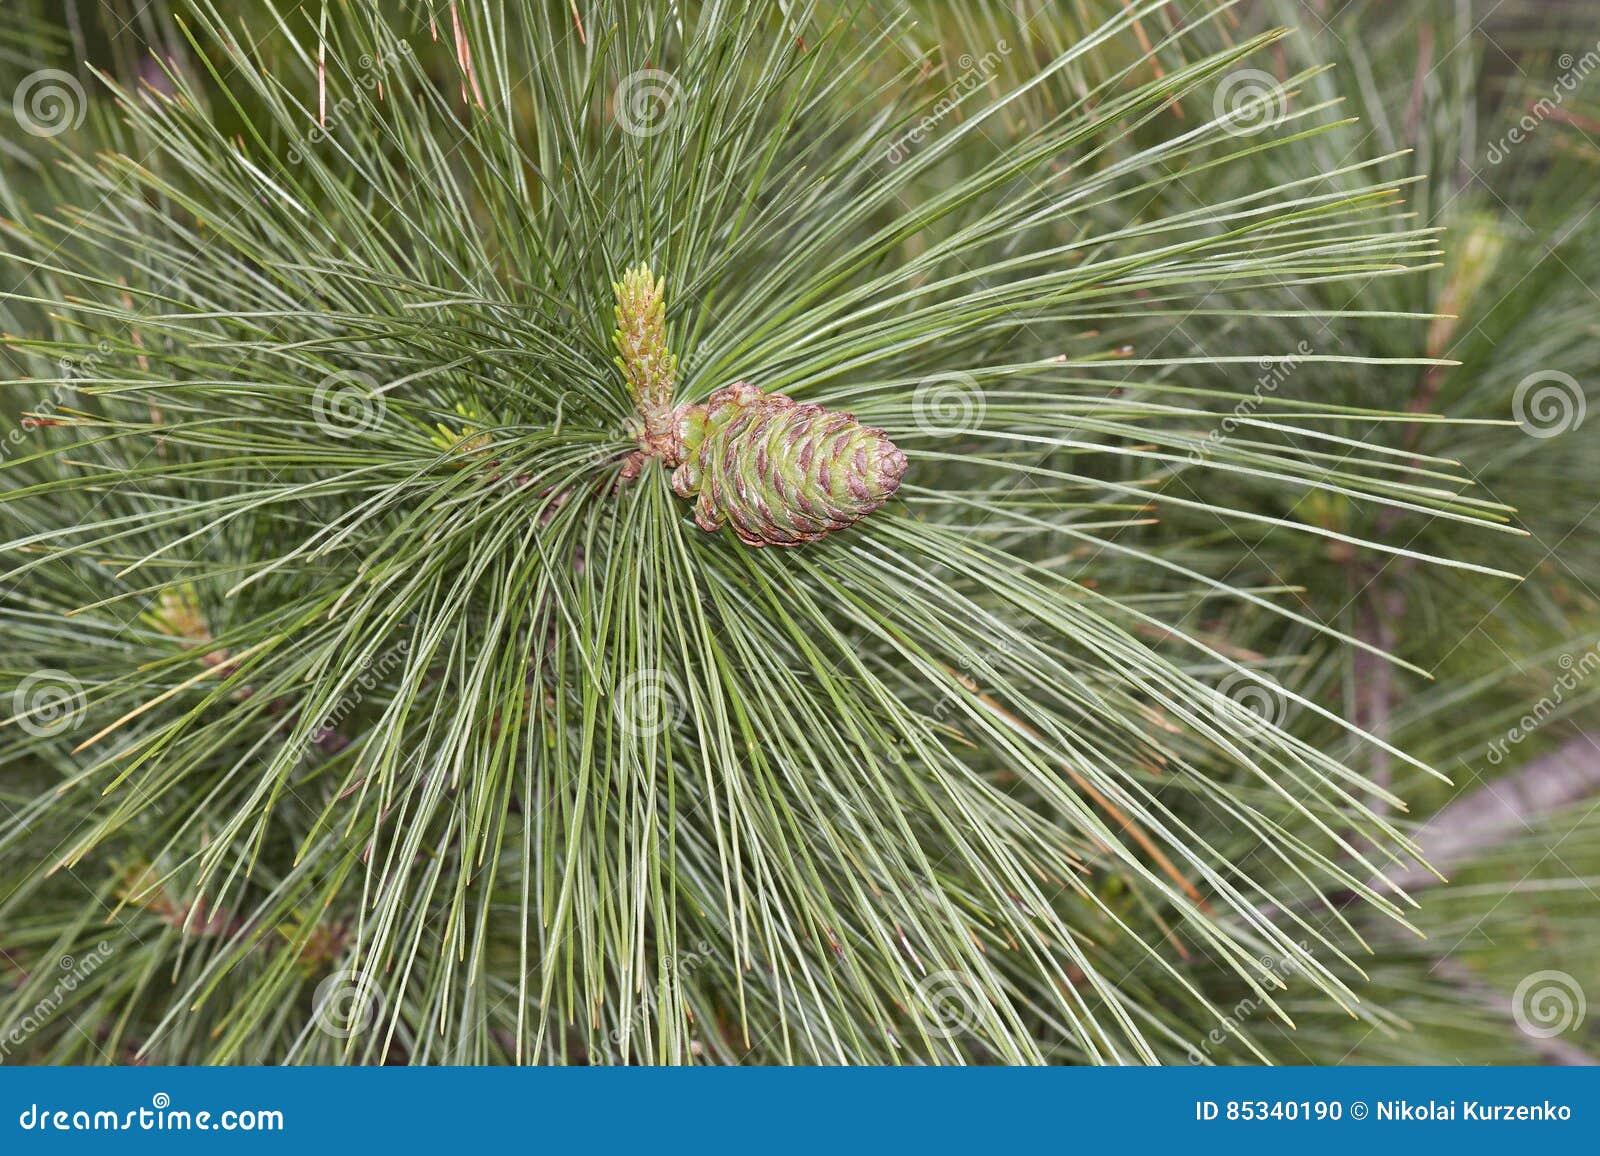 ayacahuite pine young cone